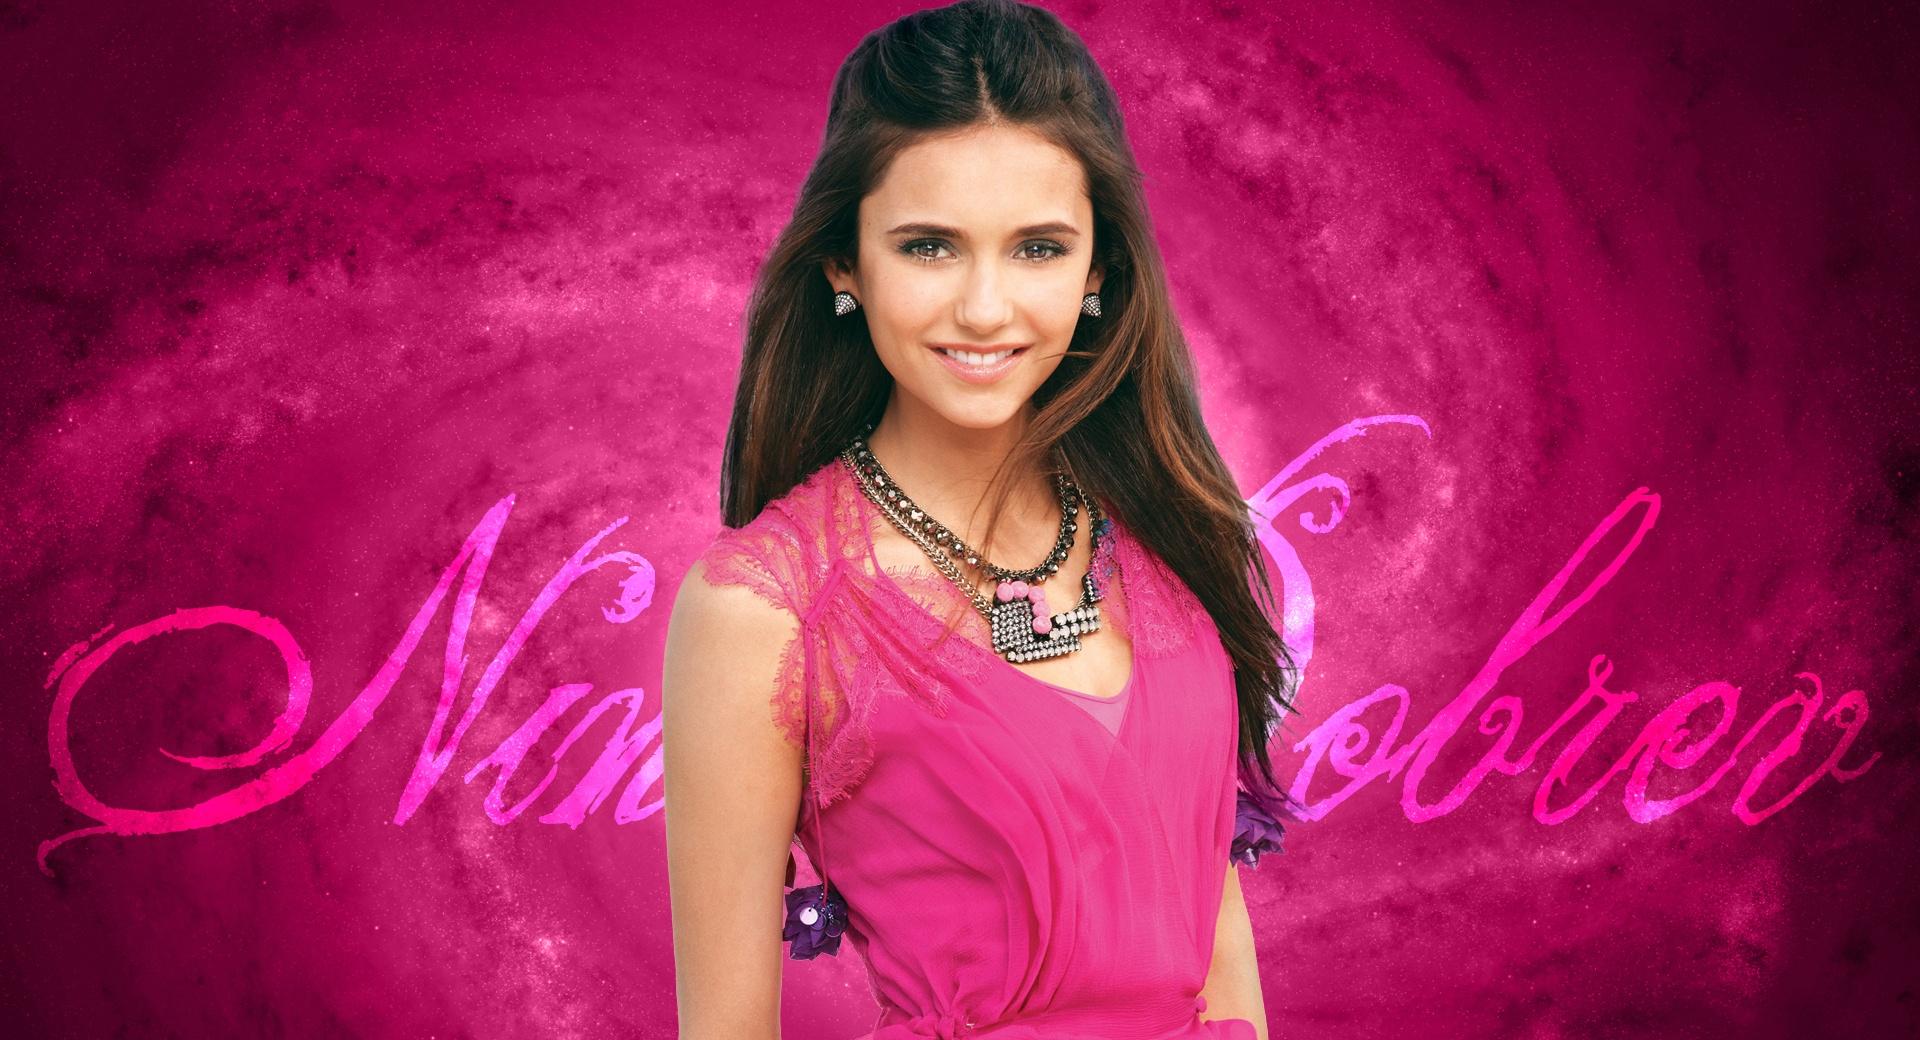 Nina Dobrev In Pink Dress at 1024 x 1024 iPad size wallpapers HD quality